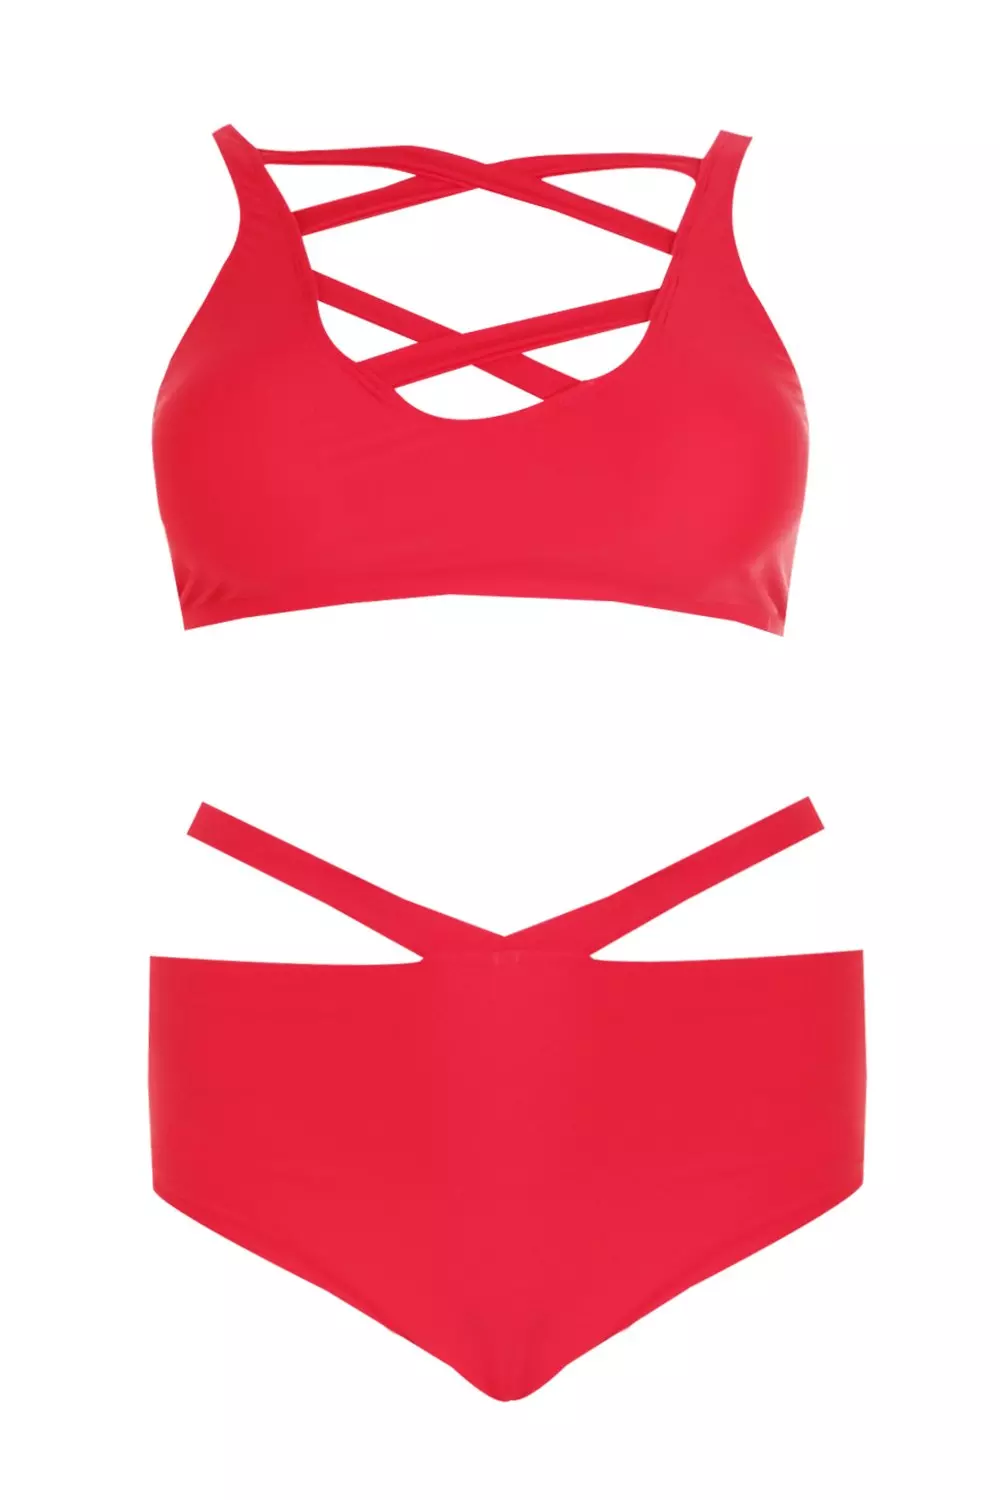 XZHGS Graphic Prints Winter Bikini Women's Solid Color Pleated Hot Pants  High Waist Fun Lifting Sweatpants Red Bodysuit Women 